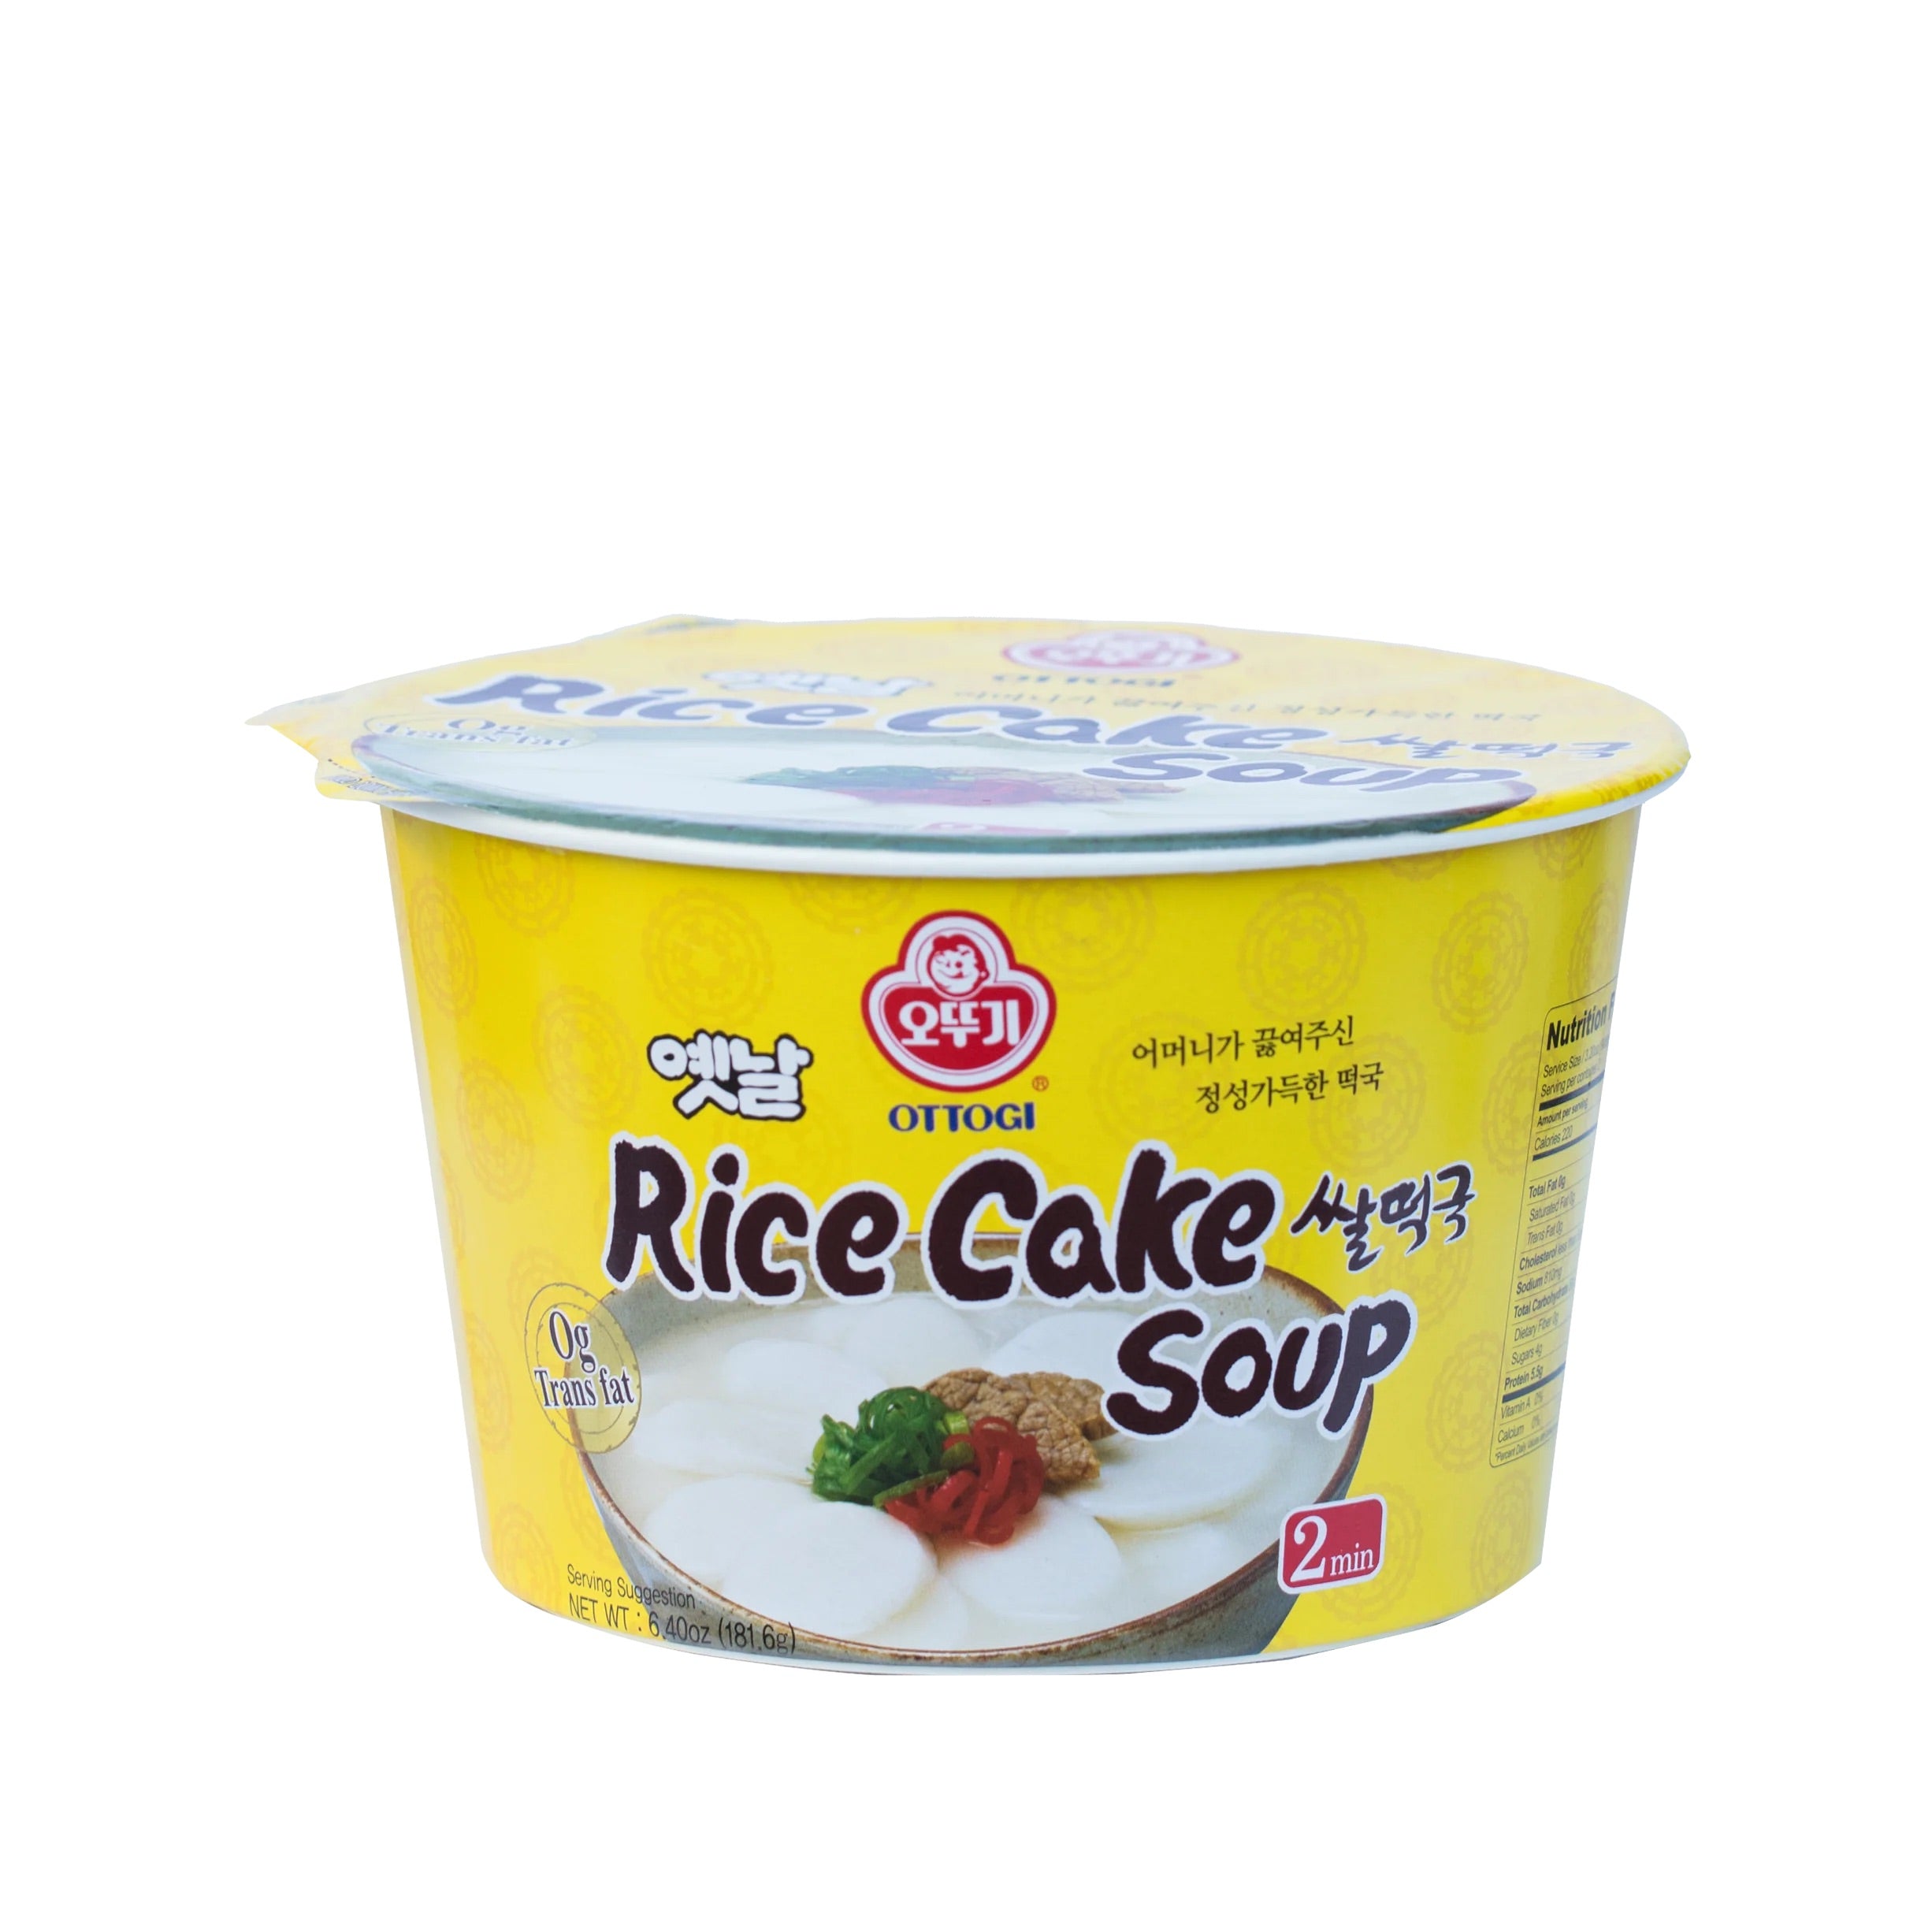 Ottogi Rice Cake Soup Bowl